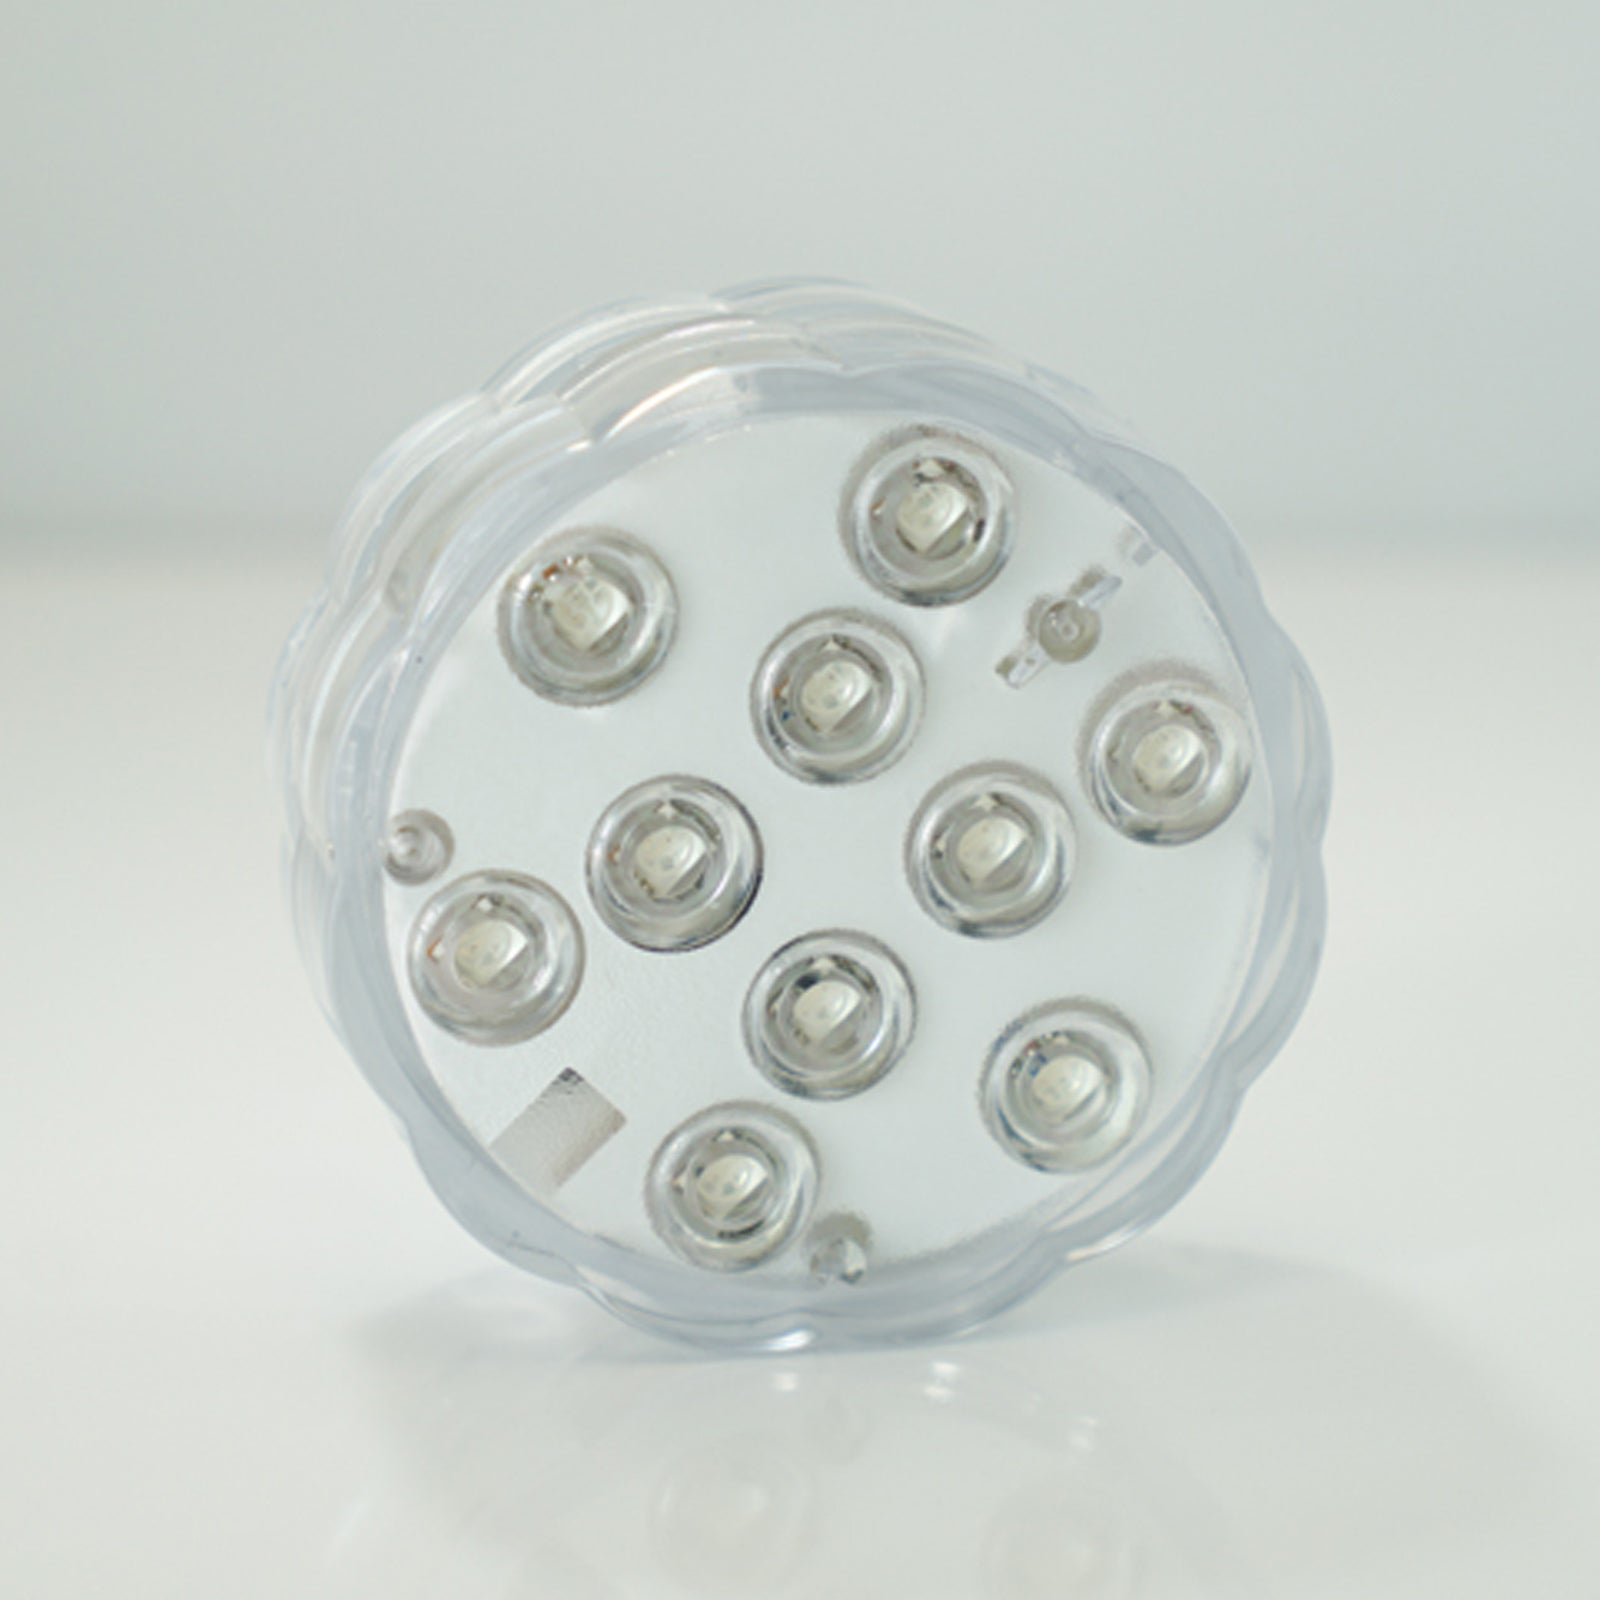 4 x Fairy Nest LED Vase Lights White Remote-Controlled 